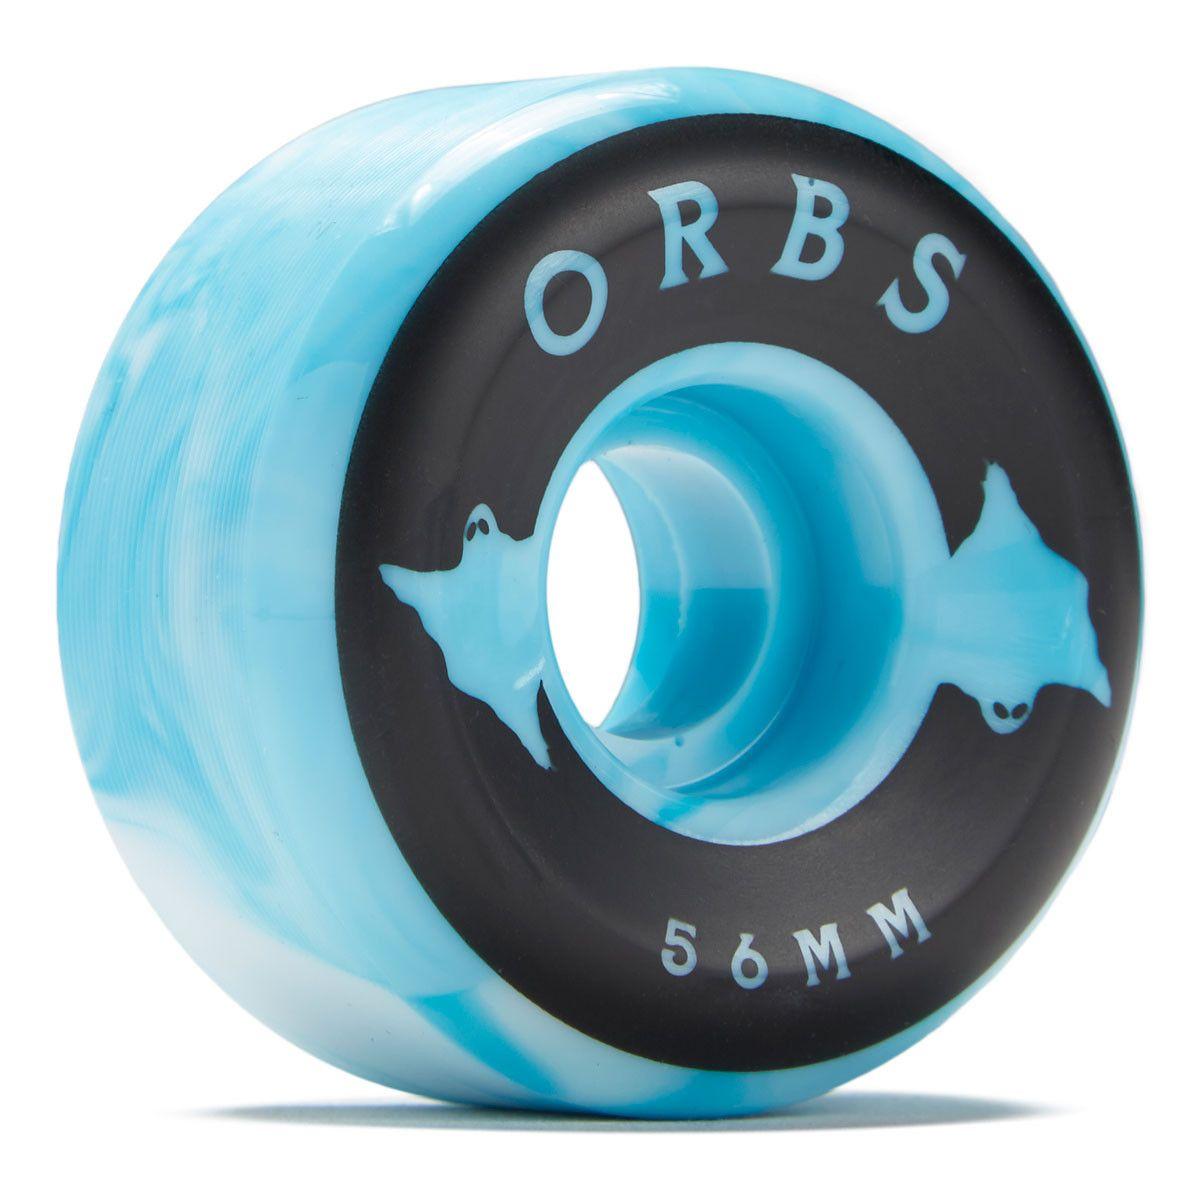 Blue and White Swirl Logo - Welcome Orbs Specters 99a Skateboard Wheels White Swirl